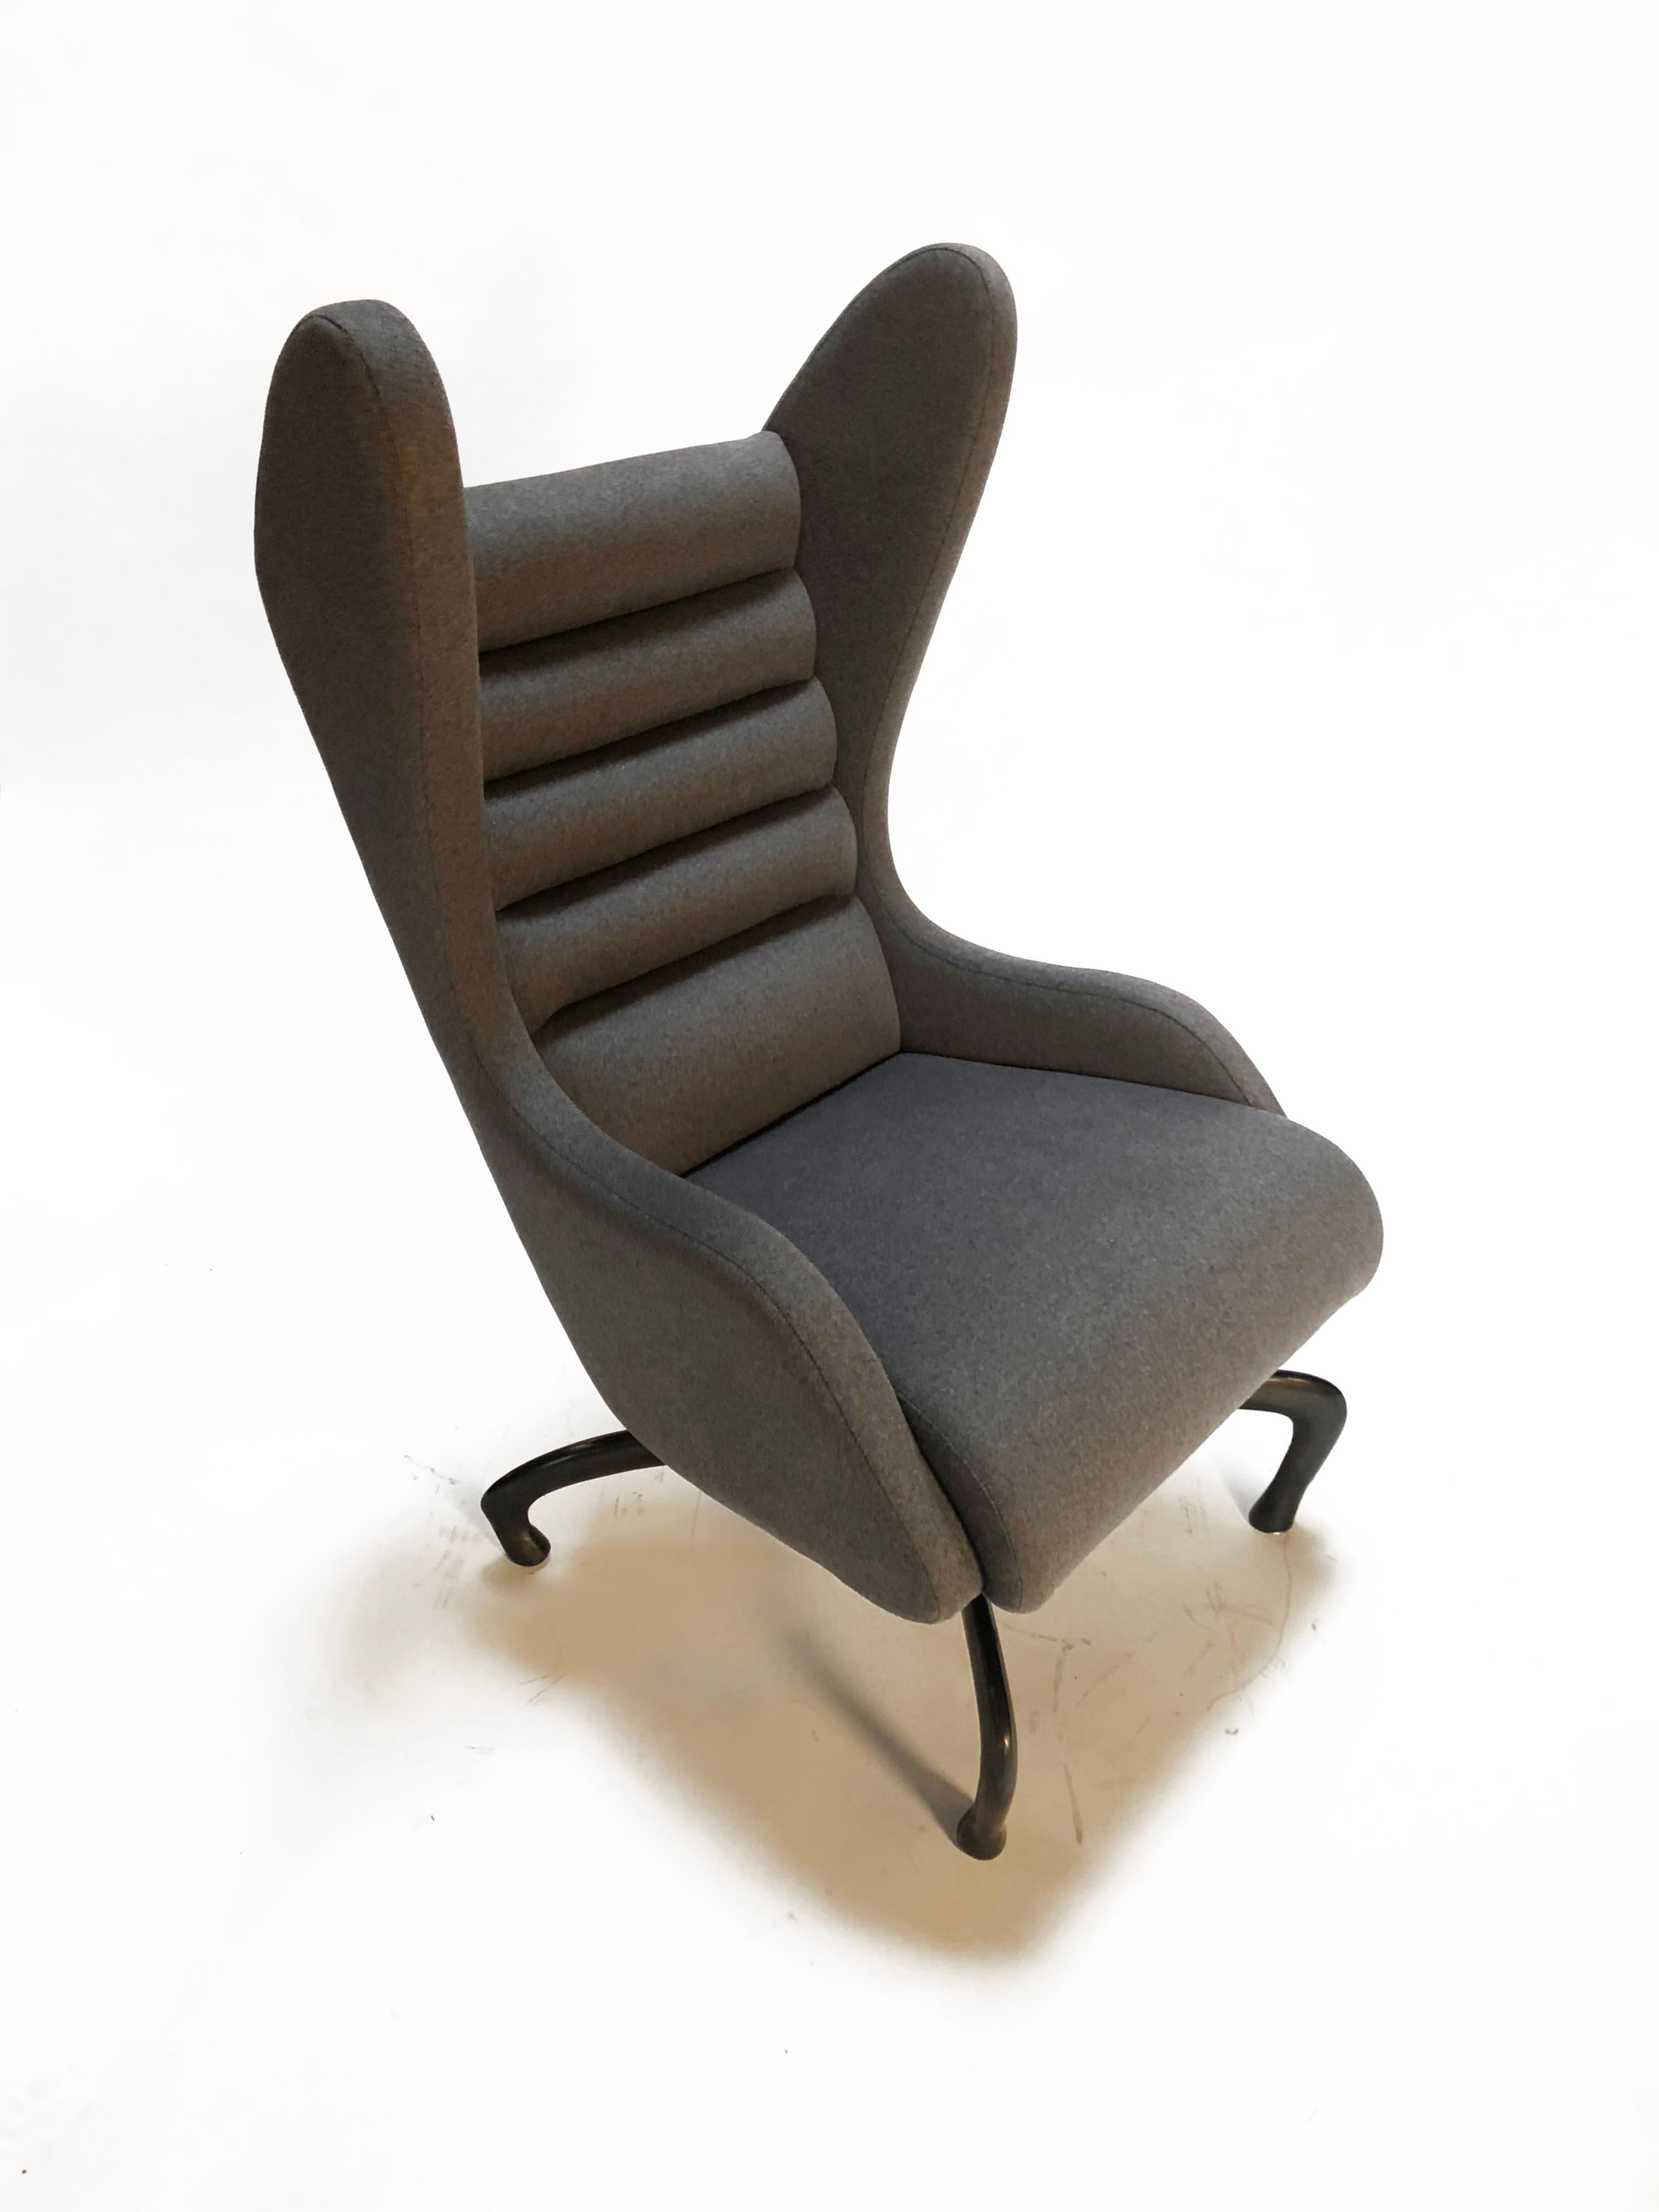 Cantering Lounge Chair, Wool Flannel / Cast Aluminum, Jordan Mozer, USA, 2003/18 For Sale 9